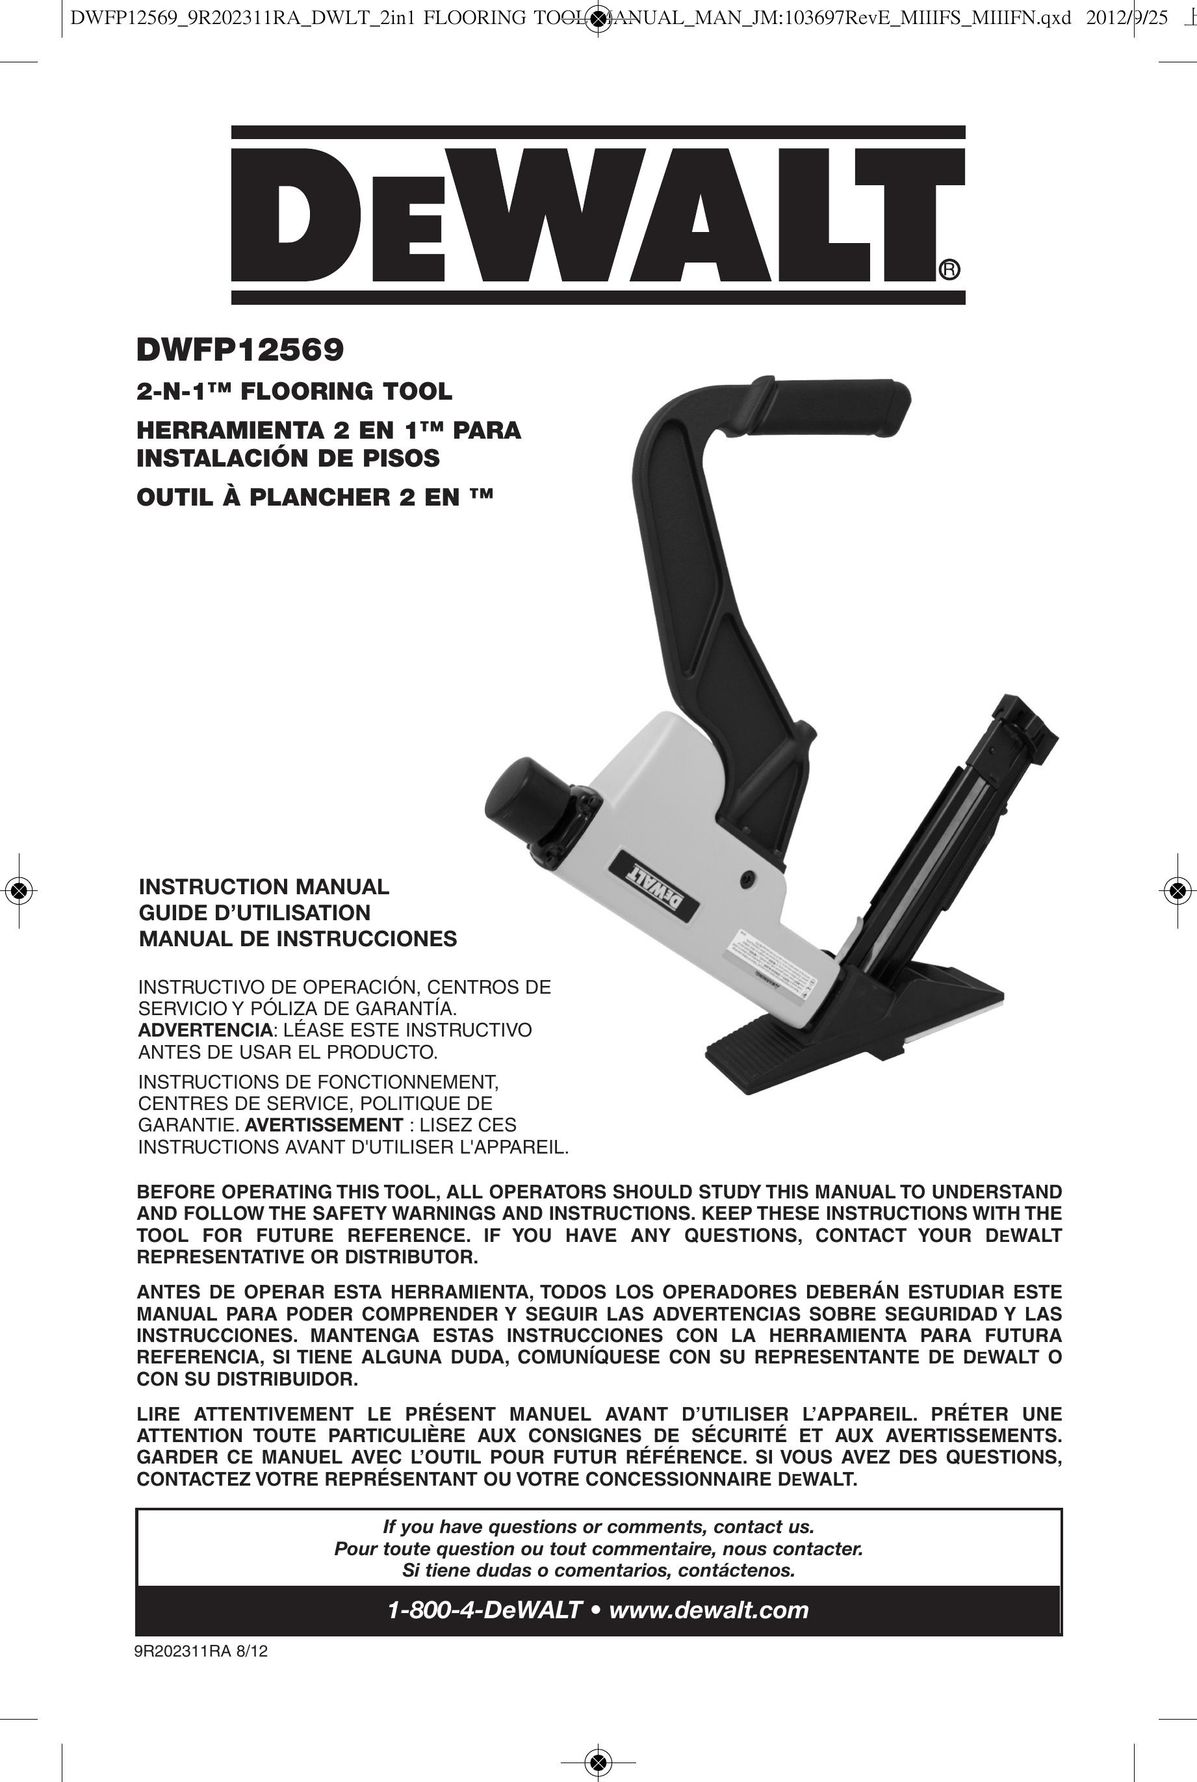 DeWalt DWFP12569 Staple Gun User Manual